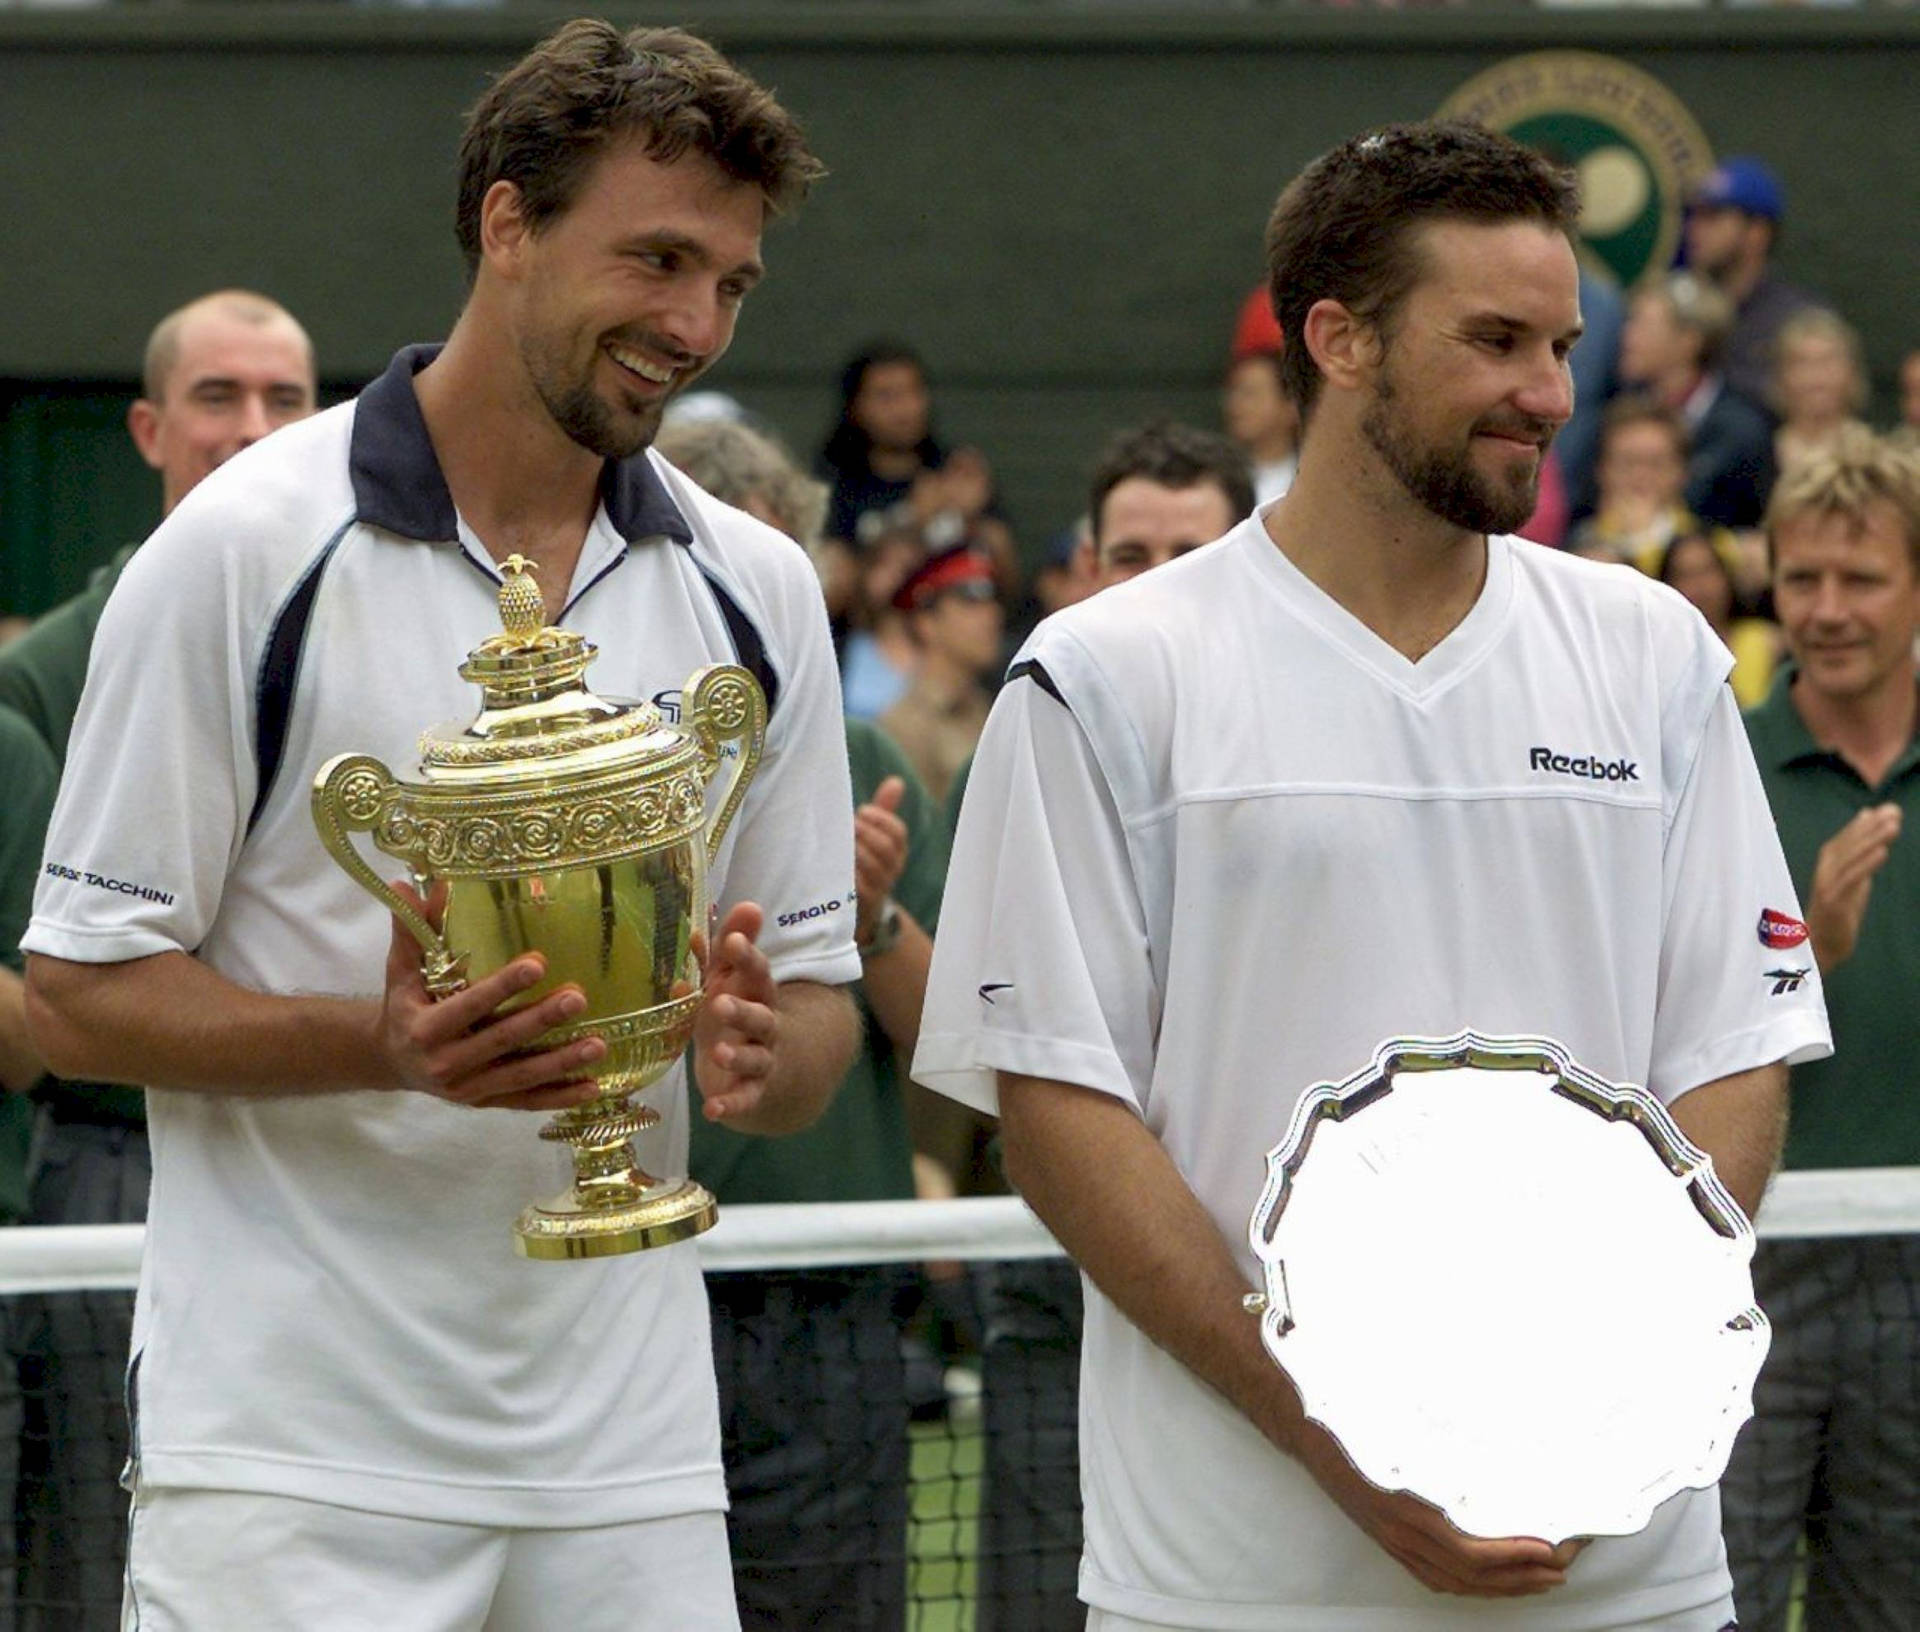 Tennis Legends Patrick Rafter and Goran Ivanisevic Sharing a Joyful Moment Wallpaper